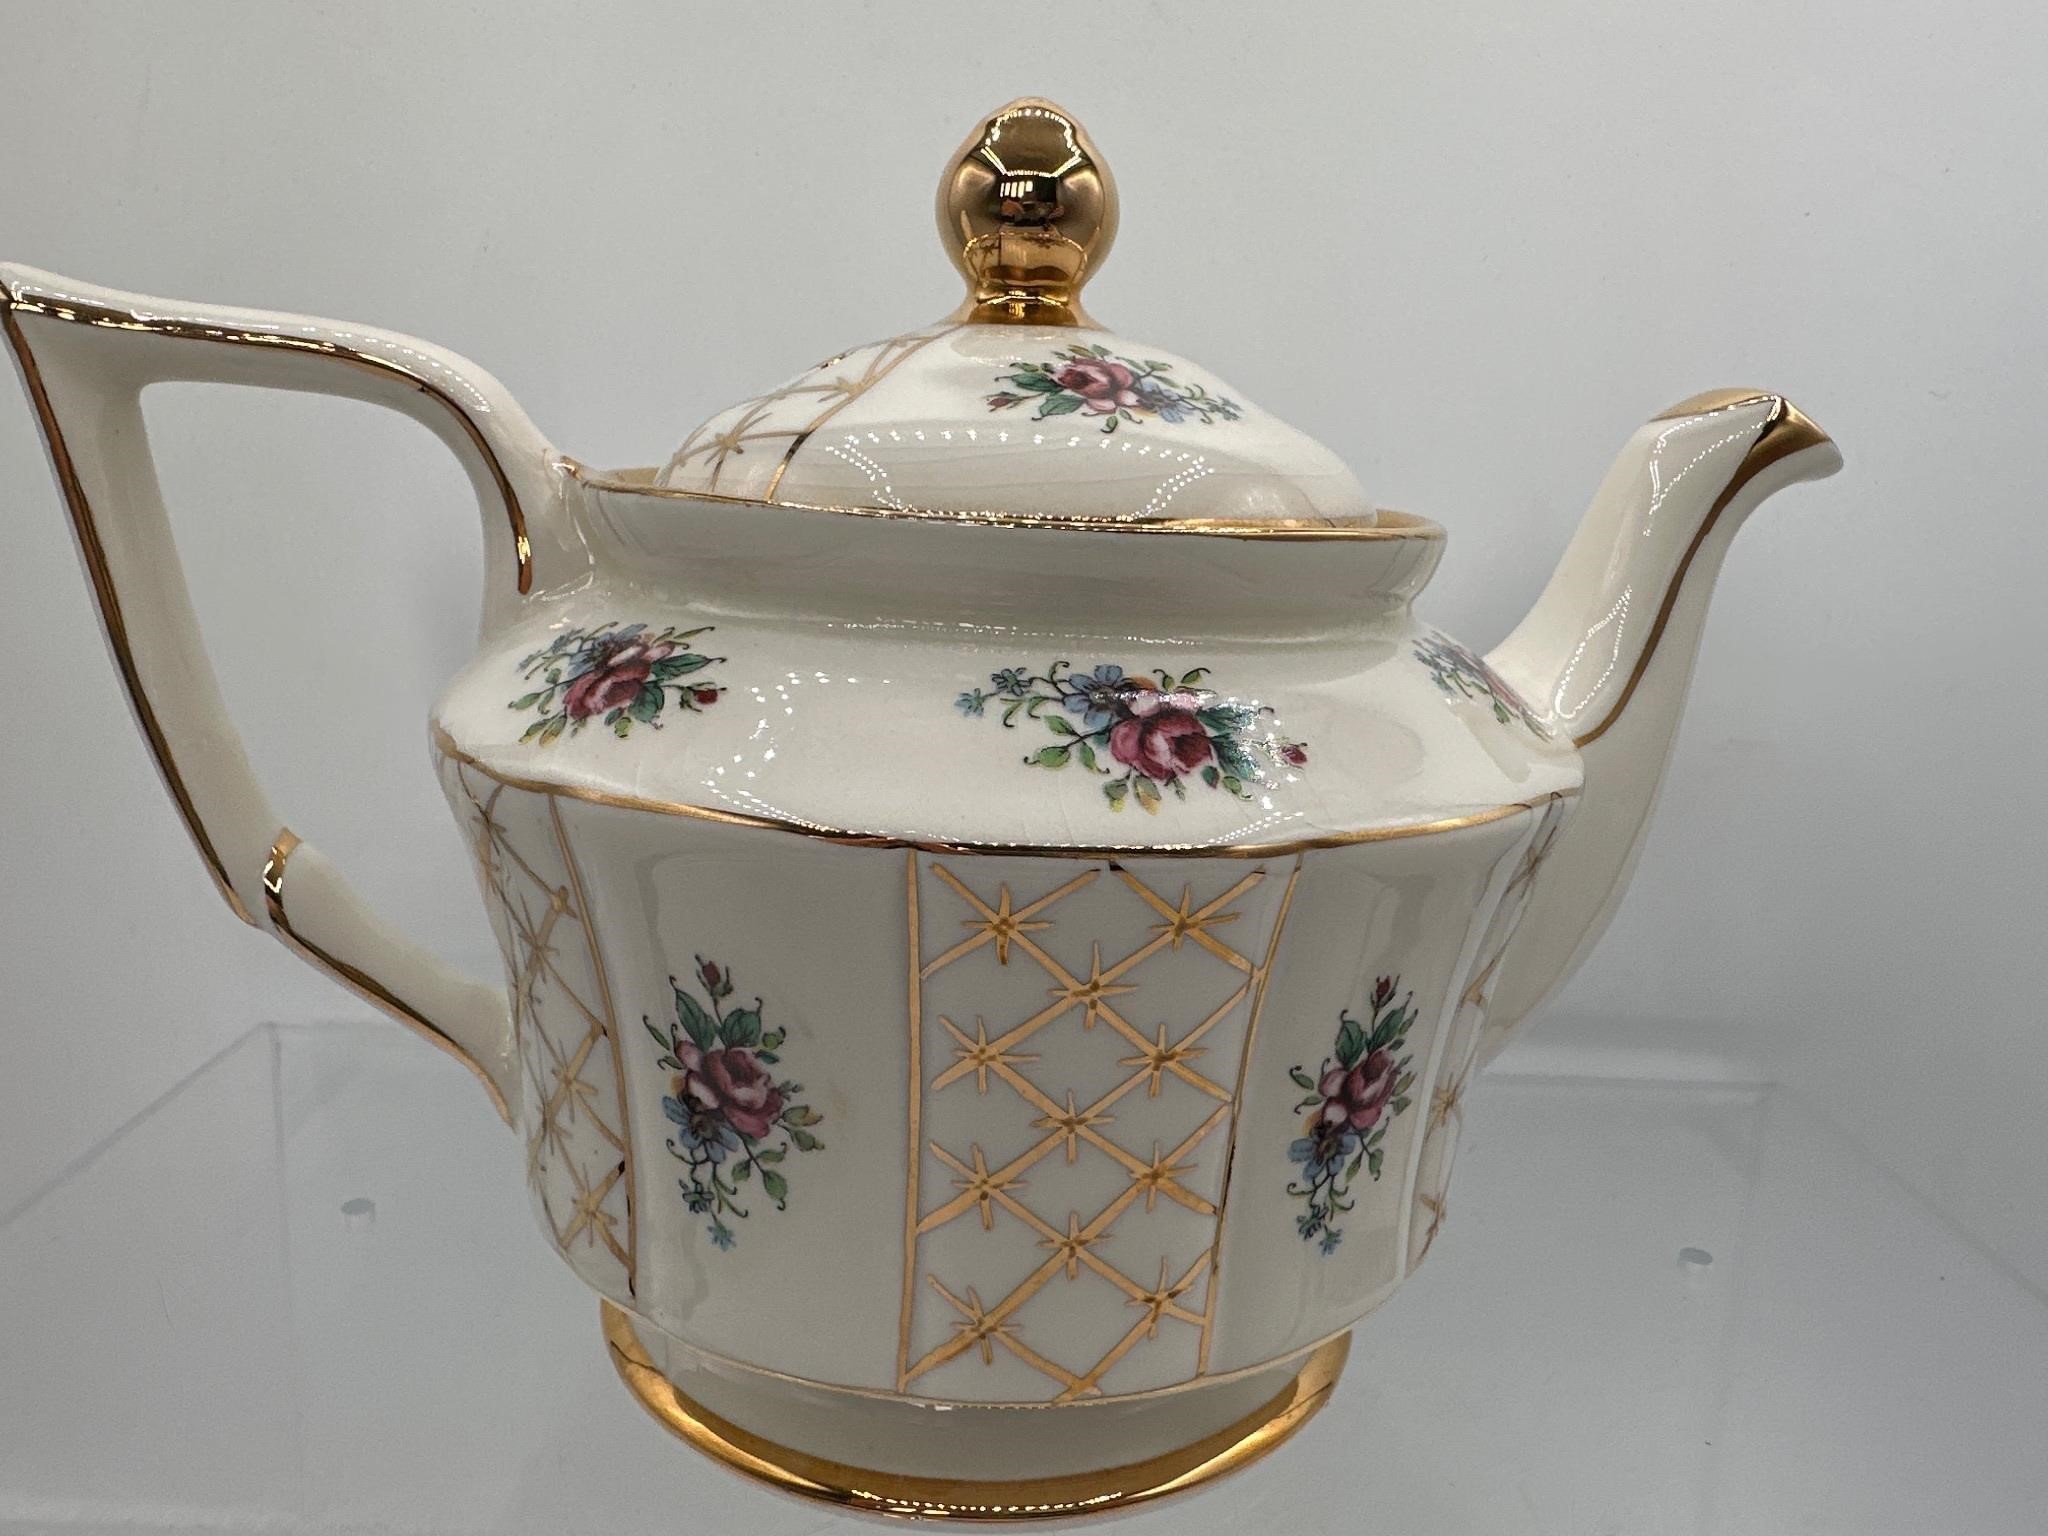 Arthur wood England tea pot